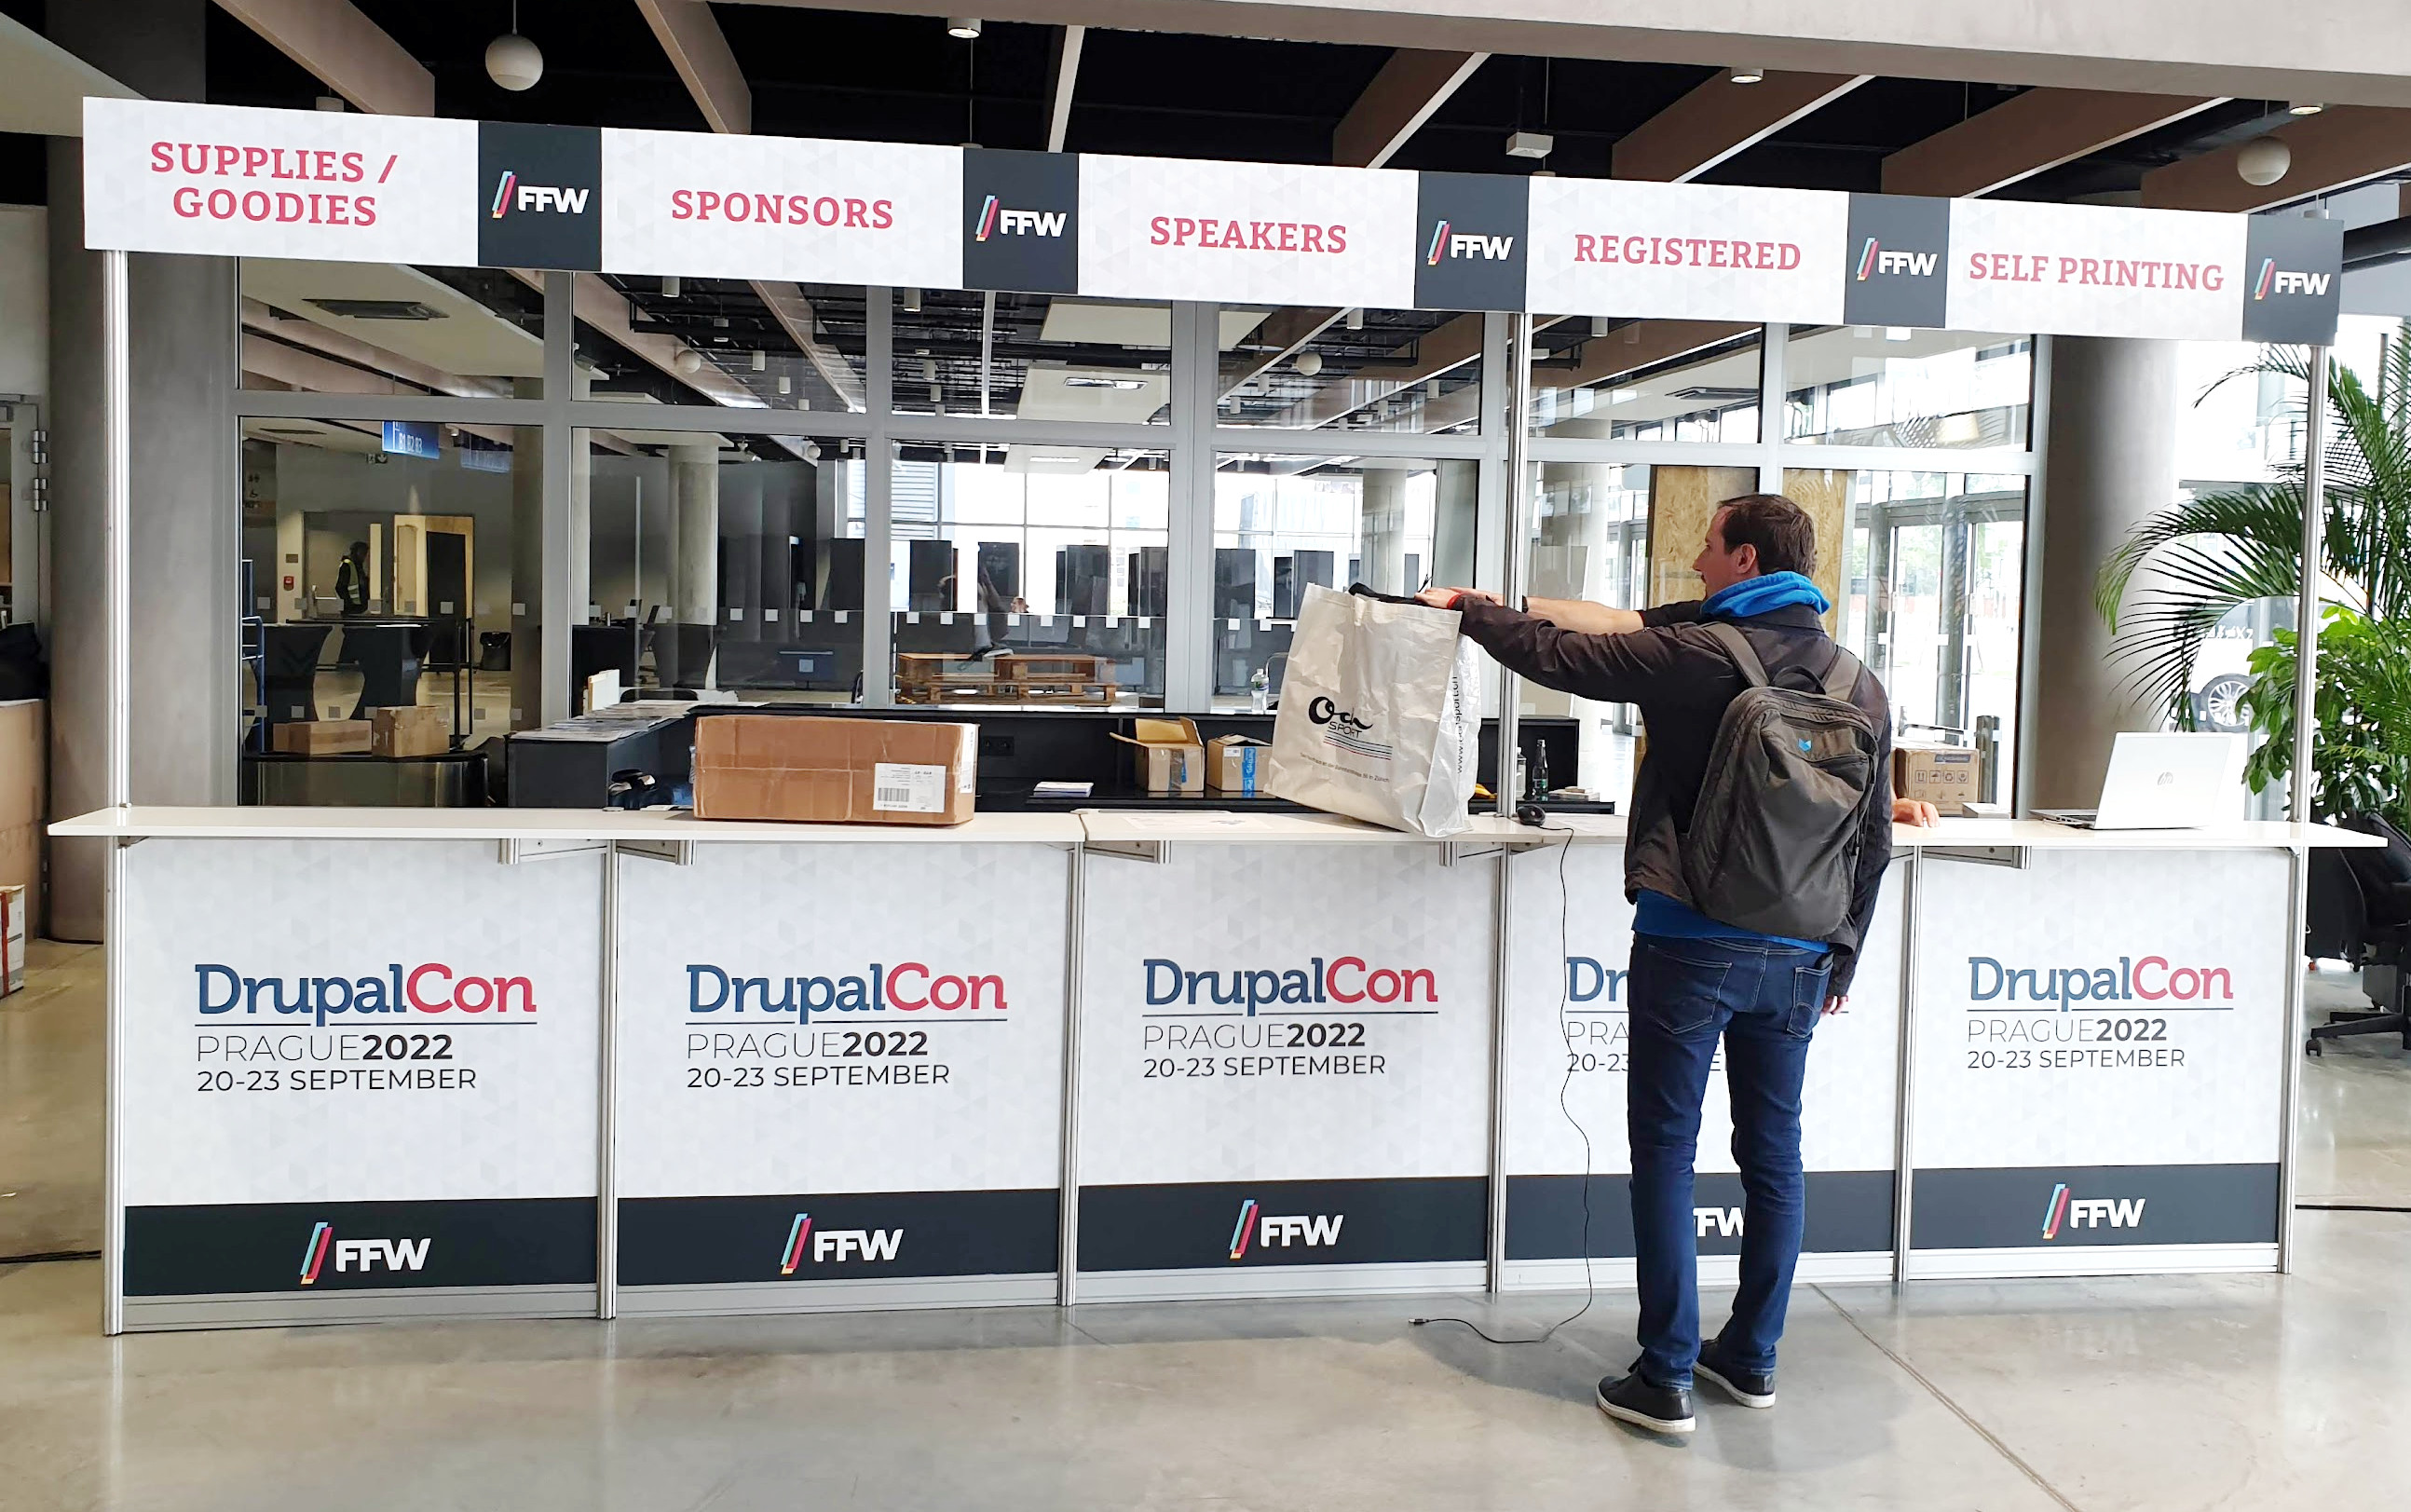 DrupalCon Reg Desk, ready for participants to start arriving